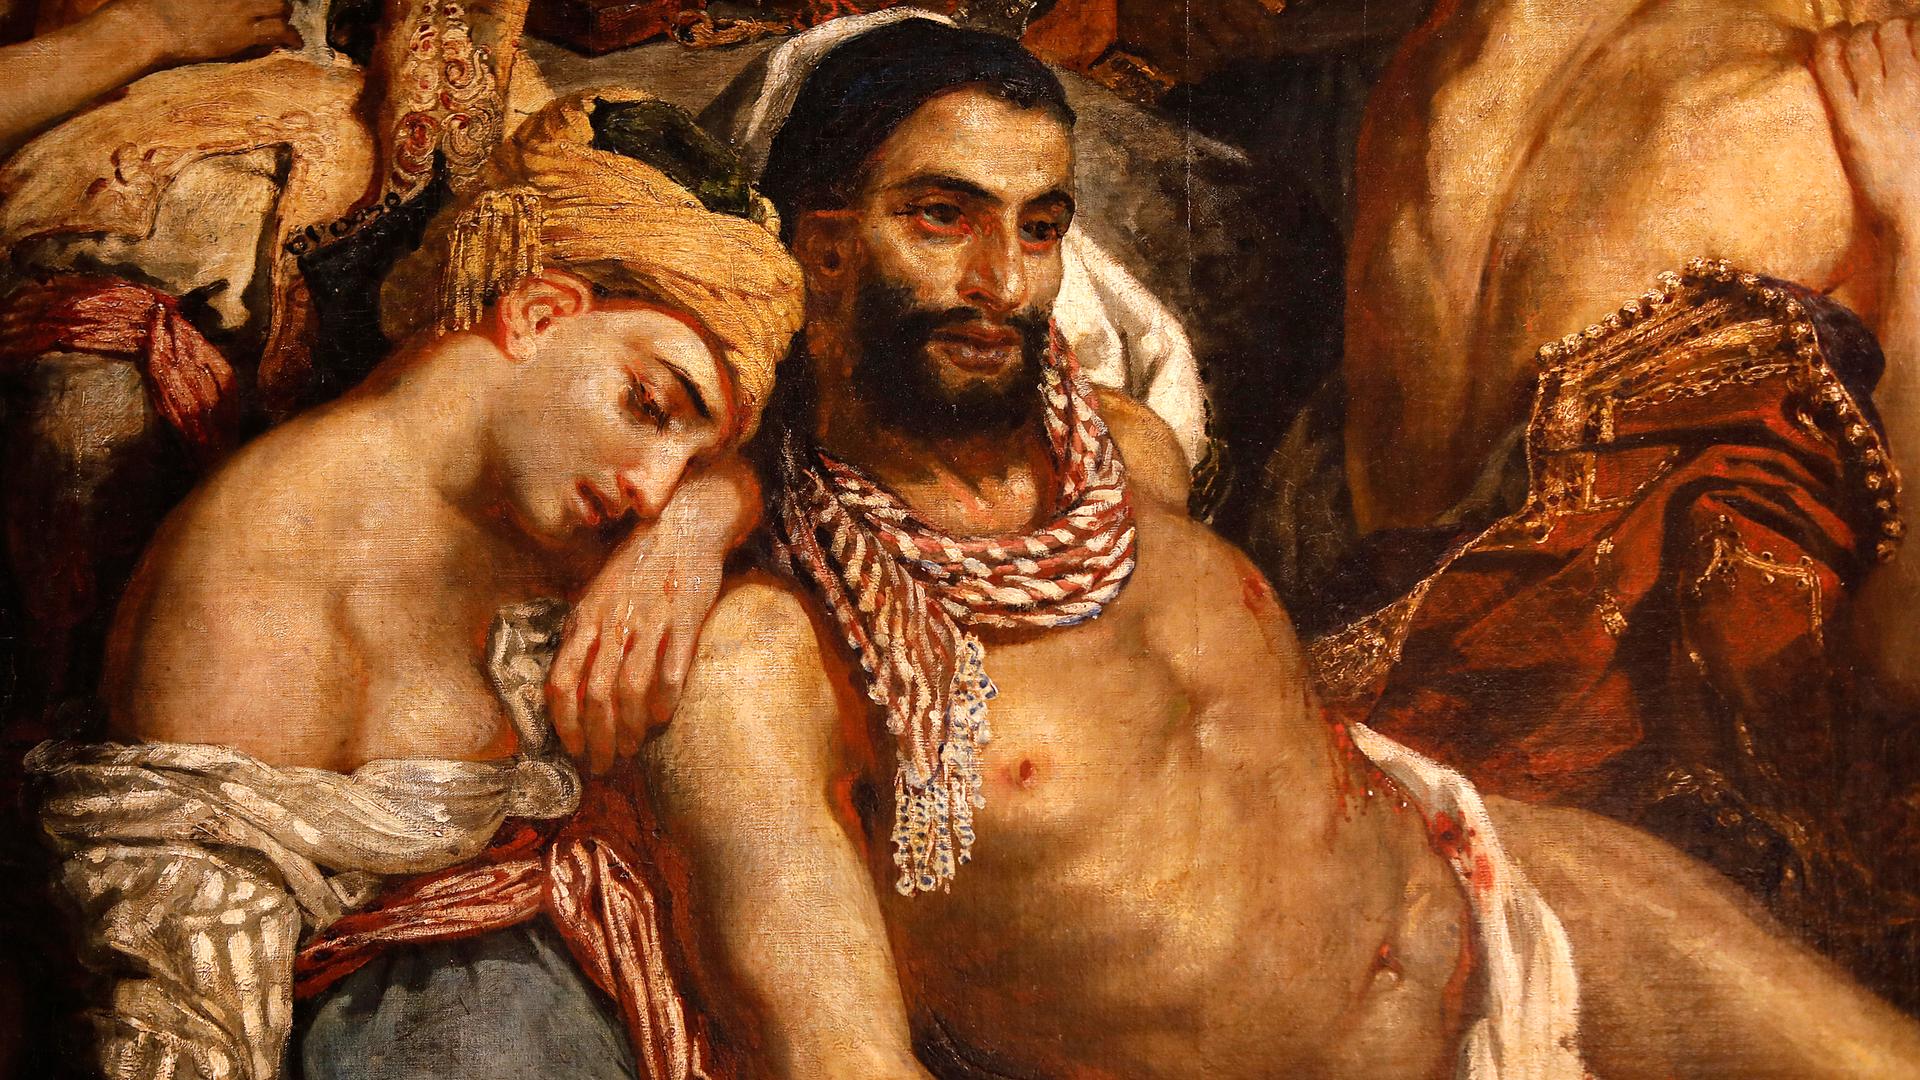 Eugene Delacroix, "The Massacre at Chios", 1824 Öl auf Leinwand (Ausschnitt)